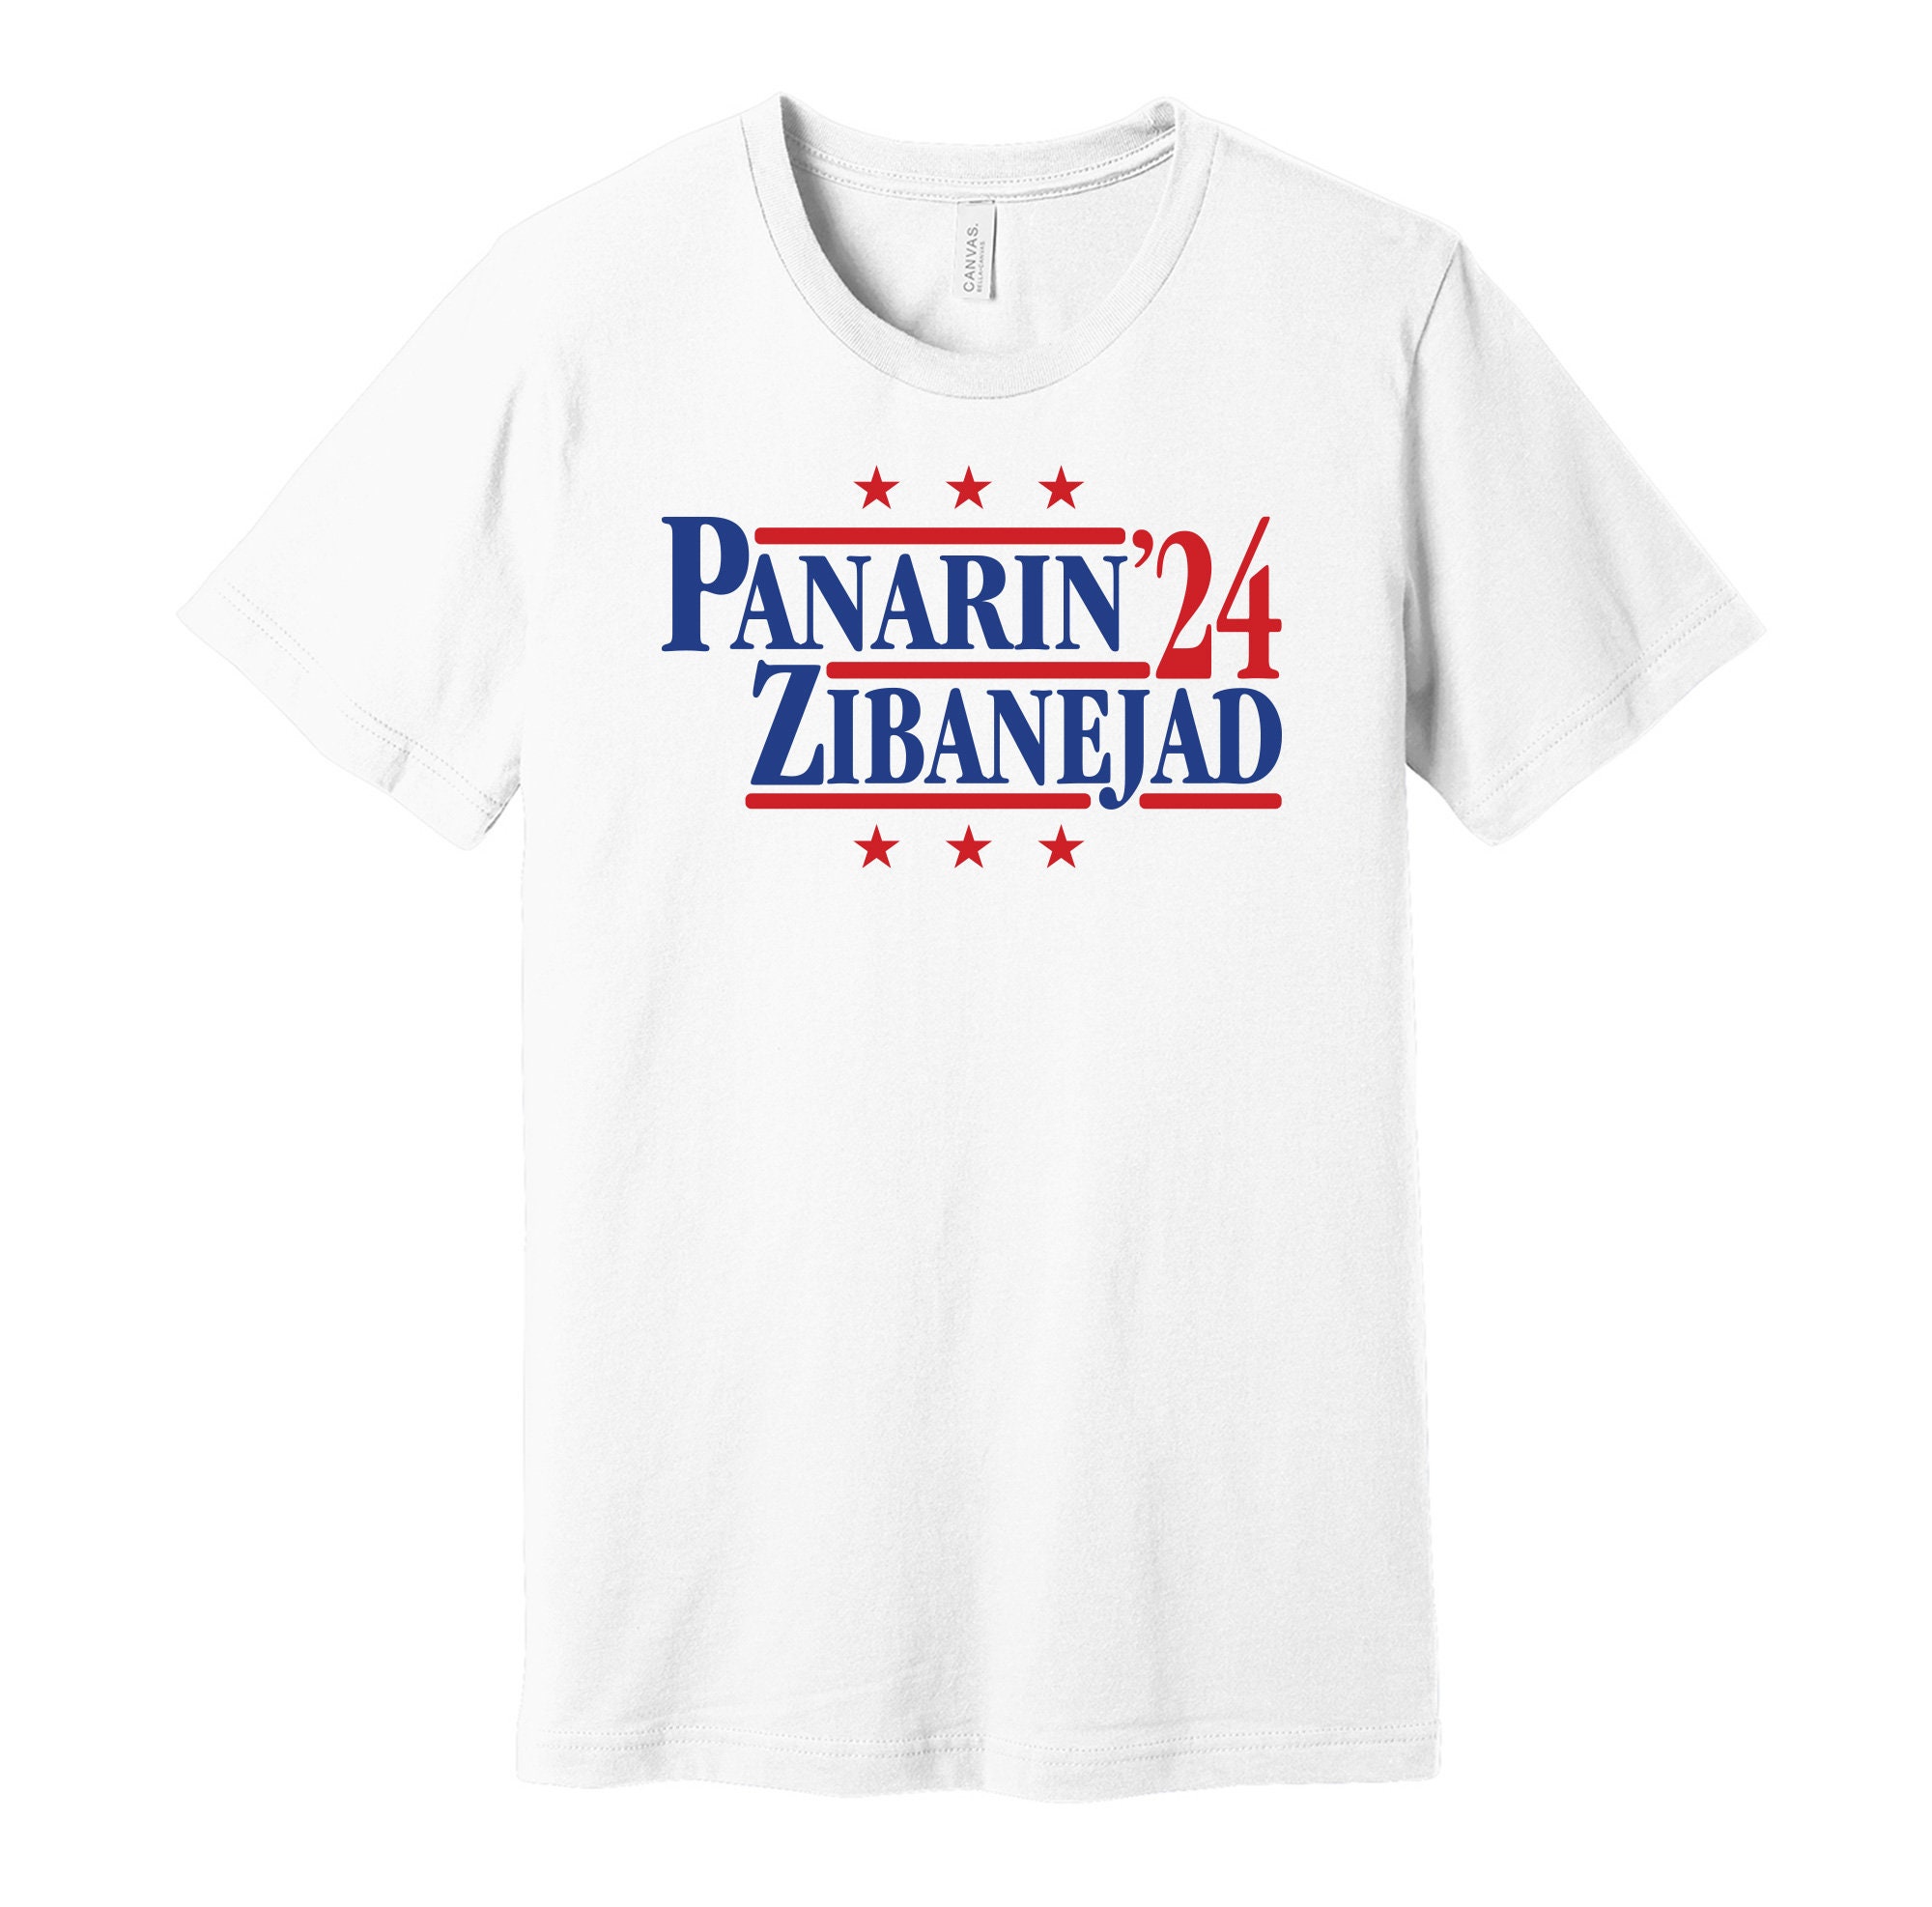 Artemi Panarin: Bread Man, Adult T-Shirt / 2XL - NHL - Sports Fan Gear | breakingt